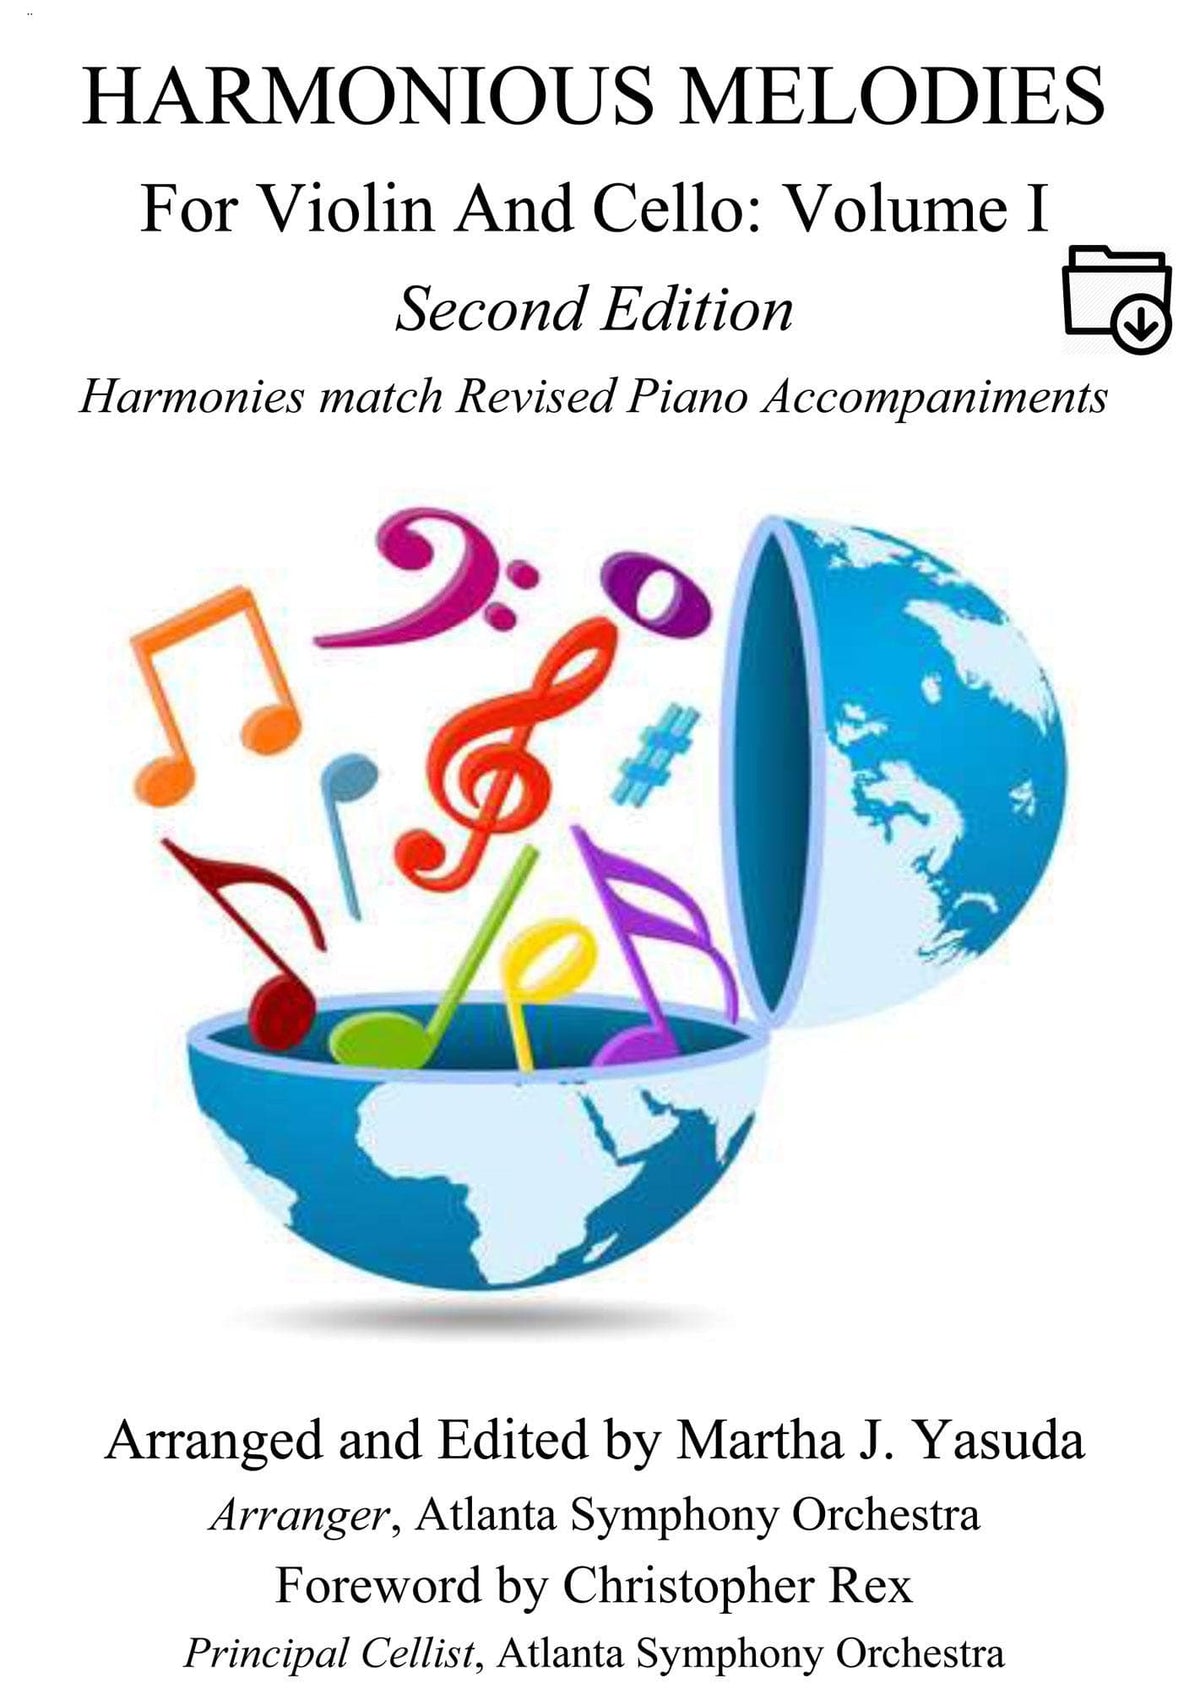 Yasuda, Martha - Harmonious Melodies For Violin and Cello, Volume I, 2nd Edition - Digital Download